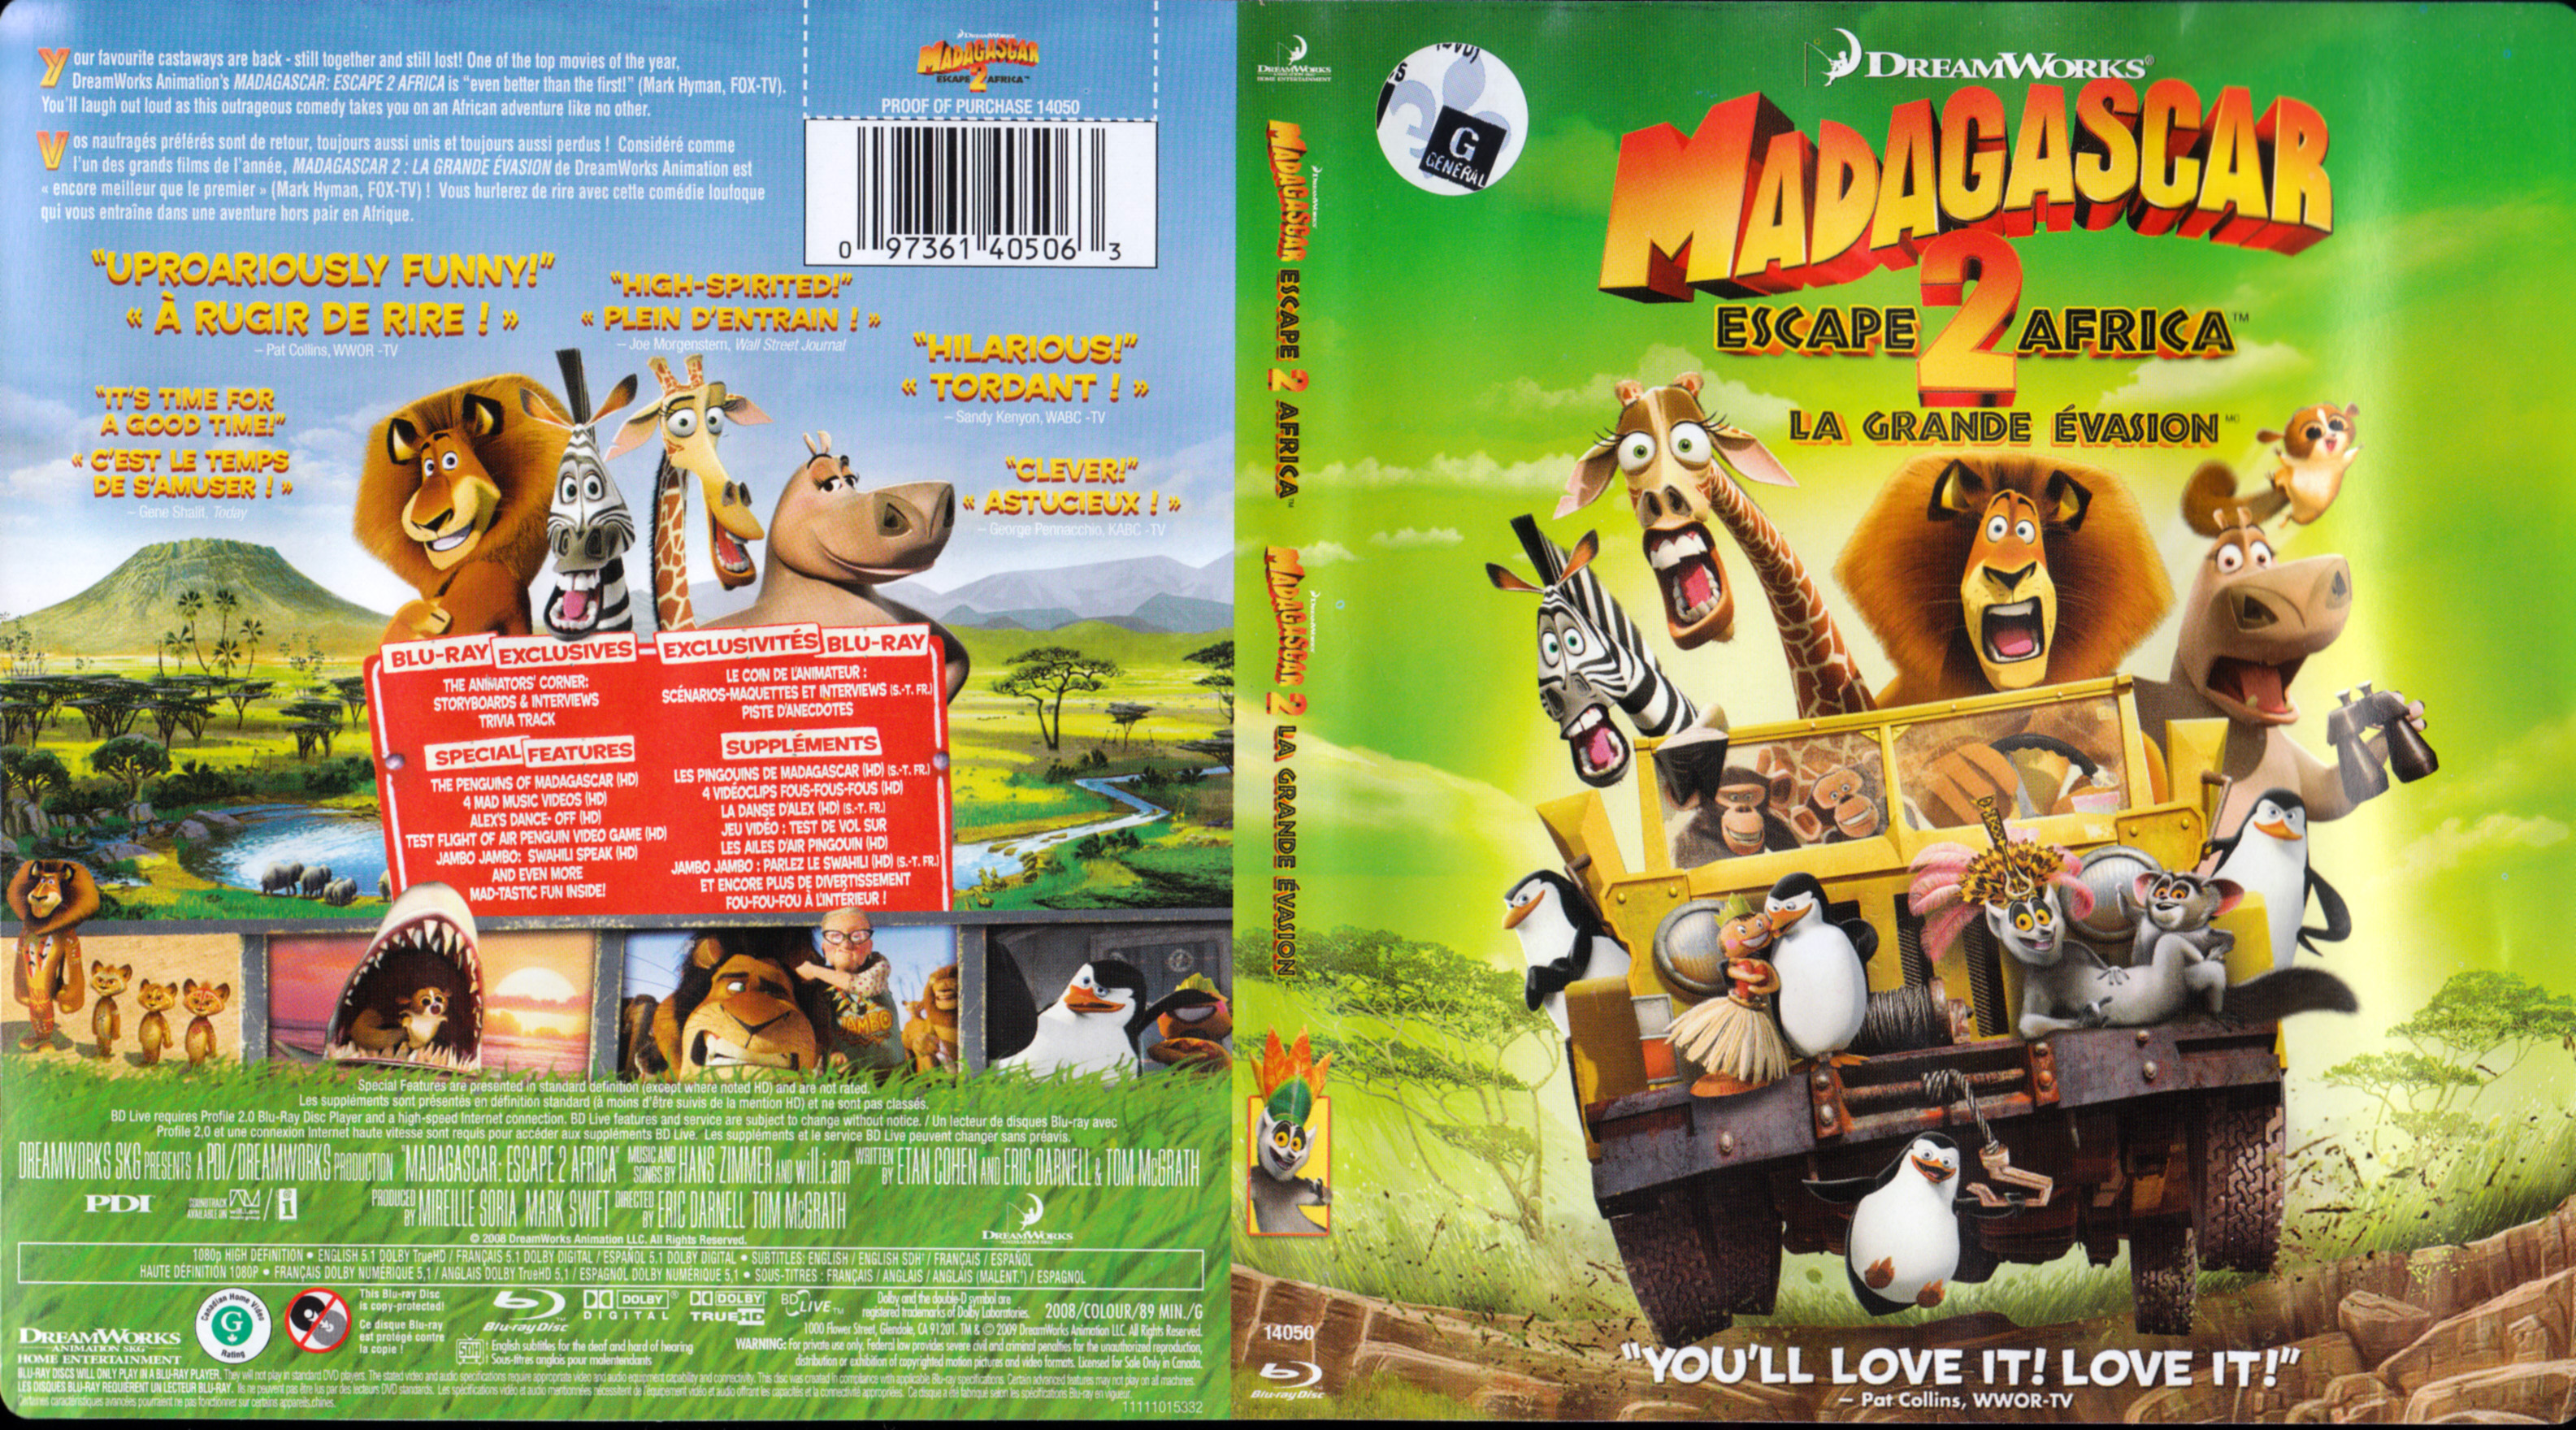 Jaquette DVD Madagascar 2 (BLU-RAY) (Canadienne)